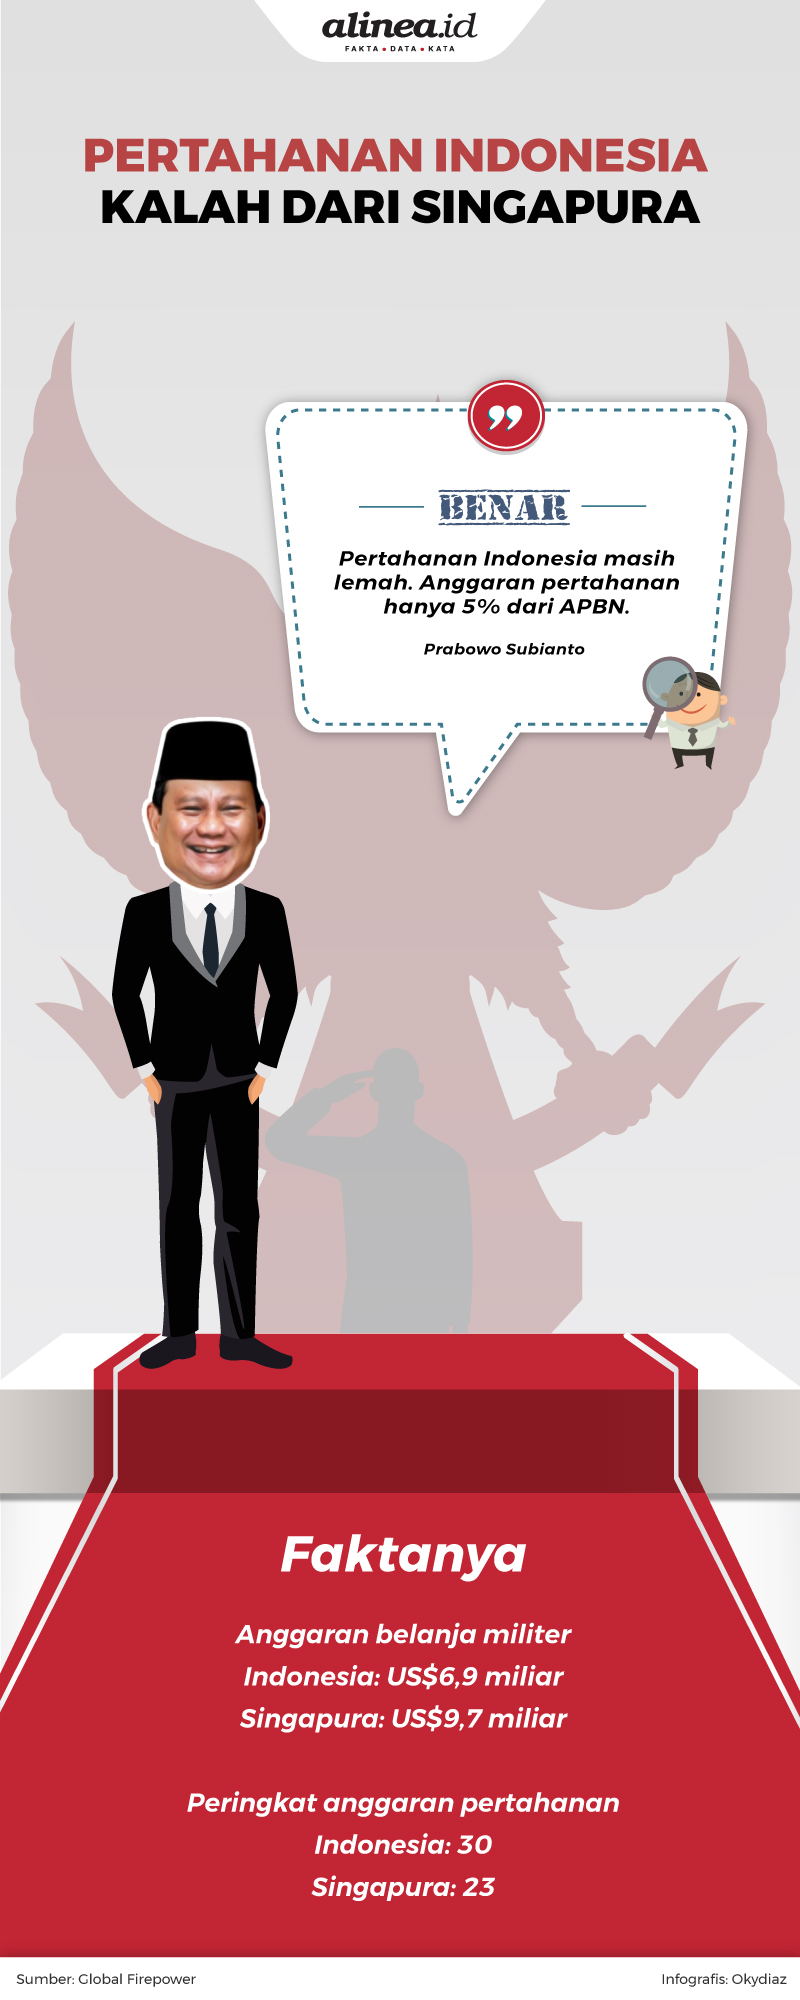 Cek fakta: Pertahanan Indonesia kalah dari Singapura. Alinea.id